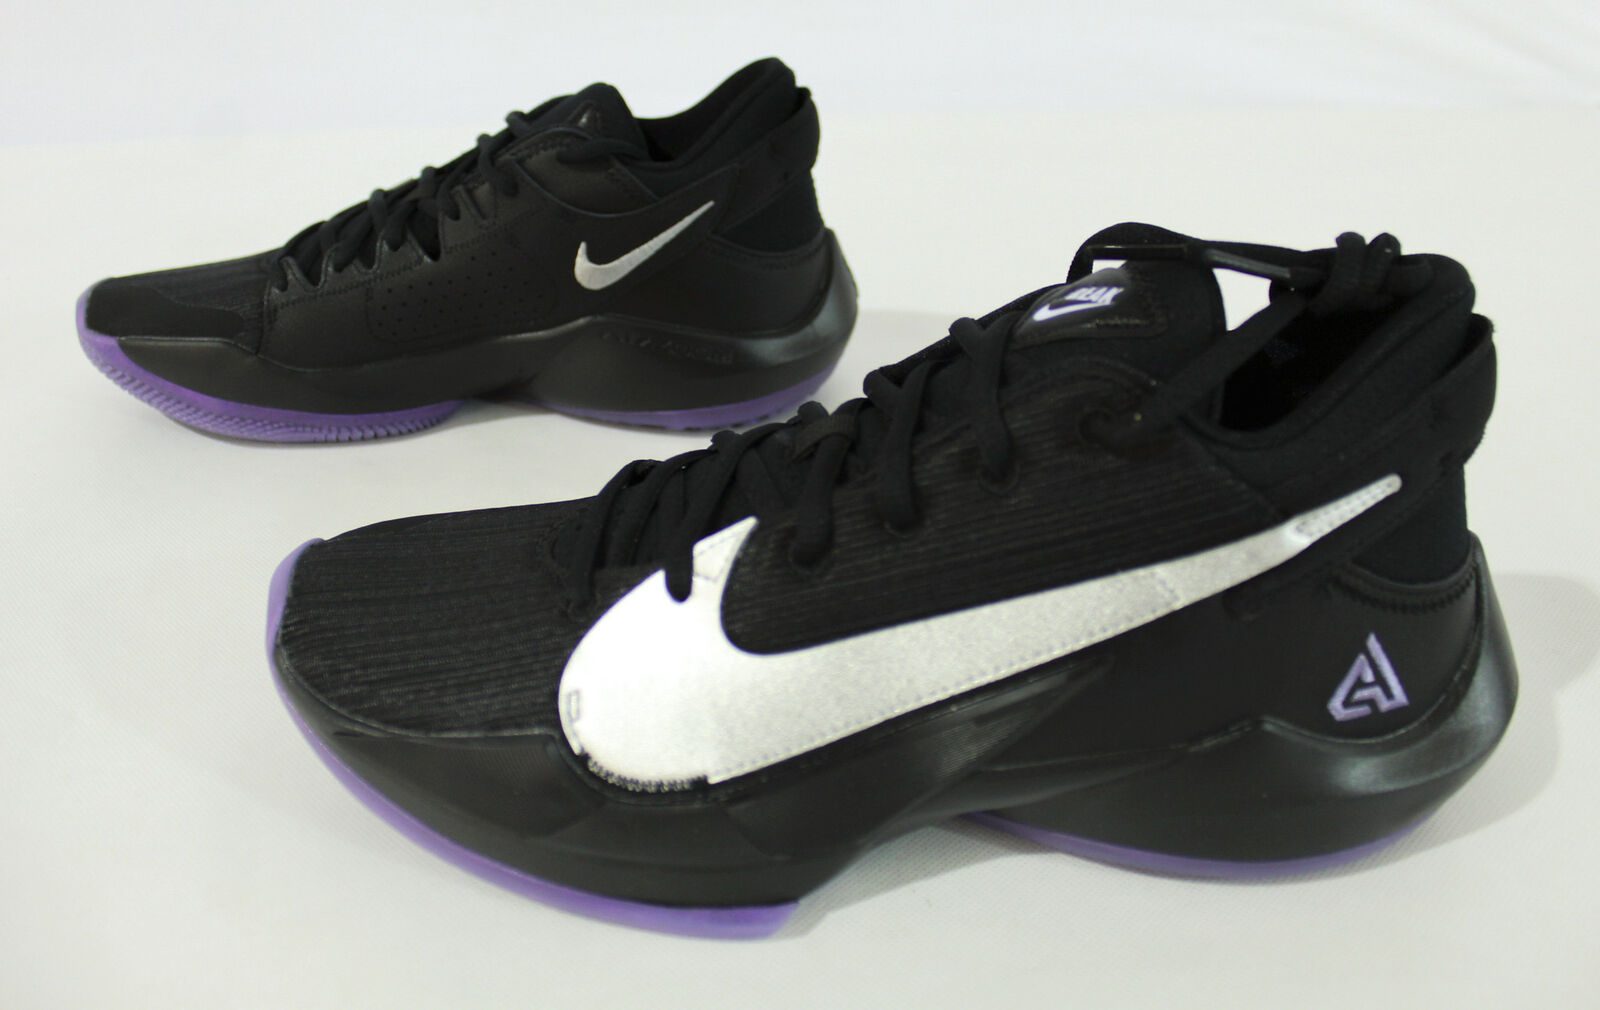 Nike Unisex Adult's Zoom Freak 2 Shoes JQ2 Black CK5424-005 Size M:10 W:11.5